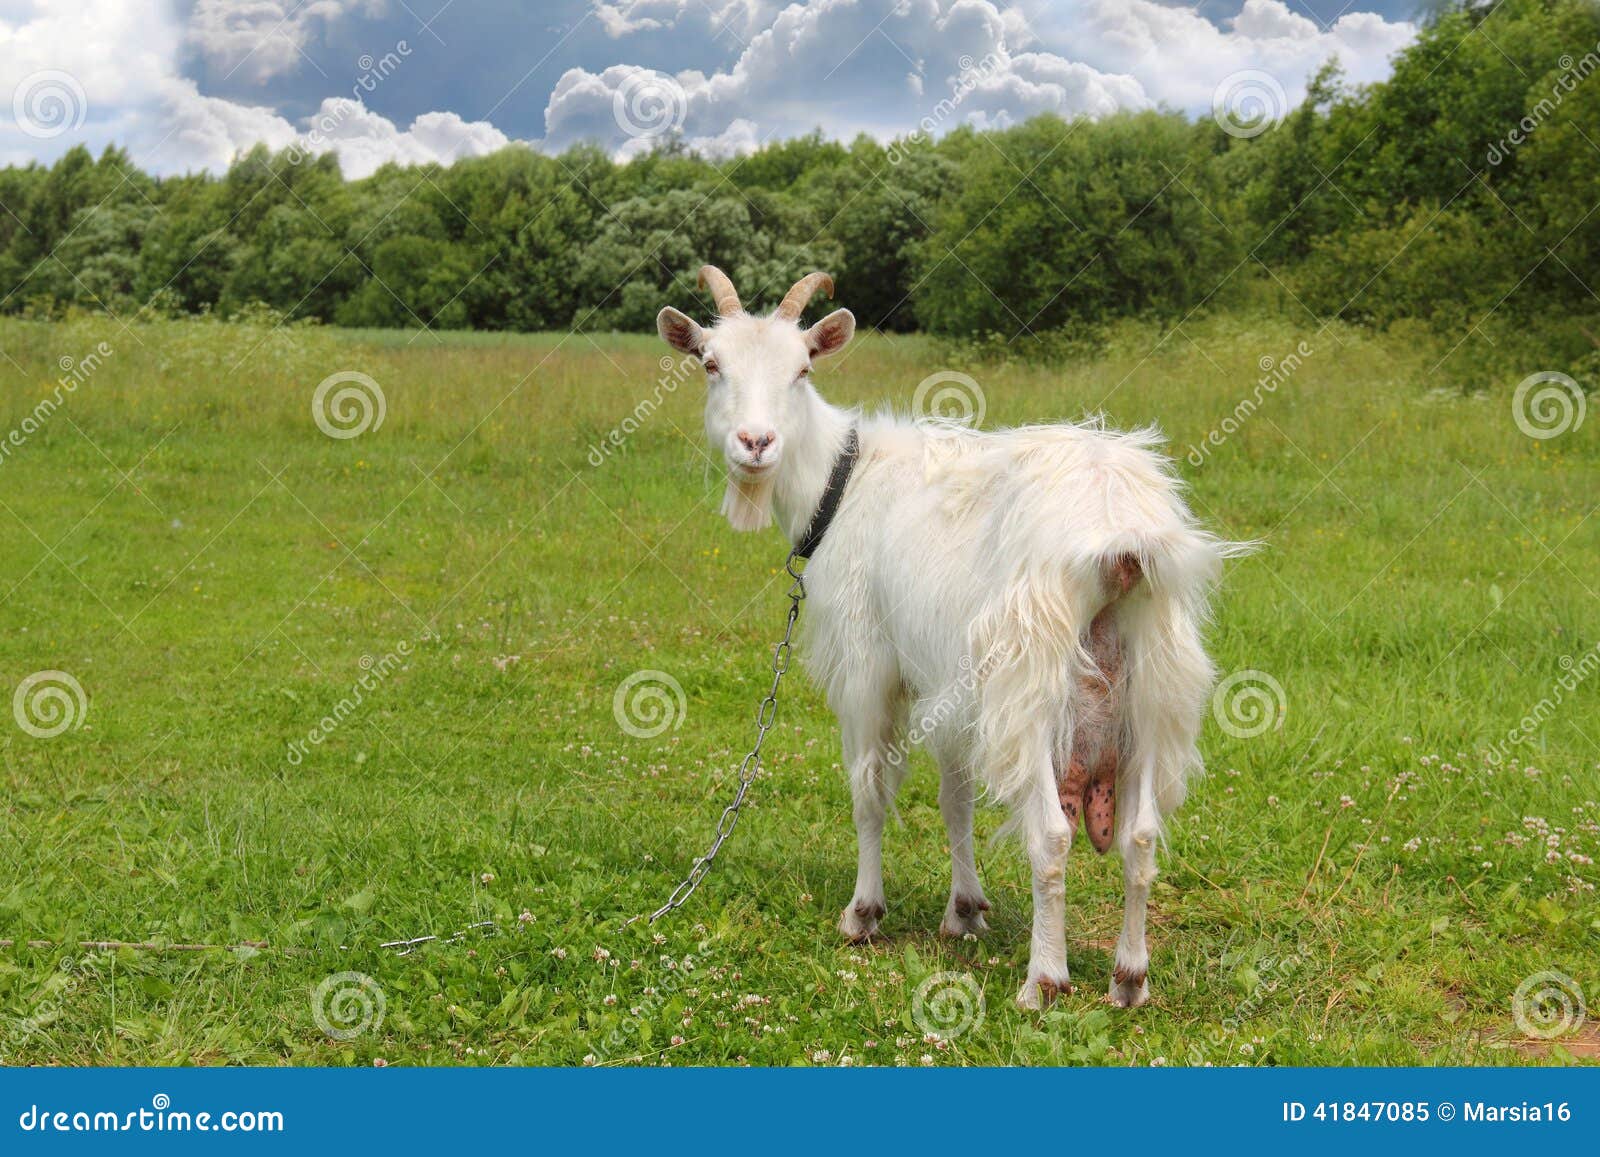 white goat grazing